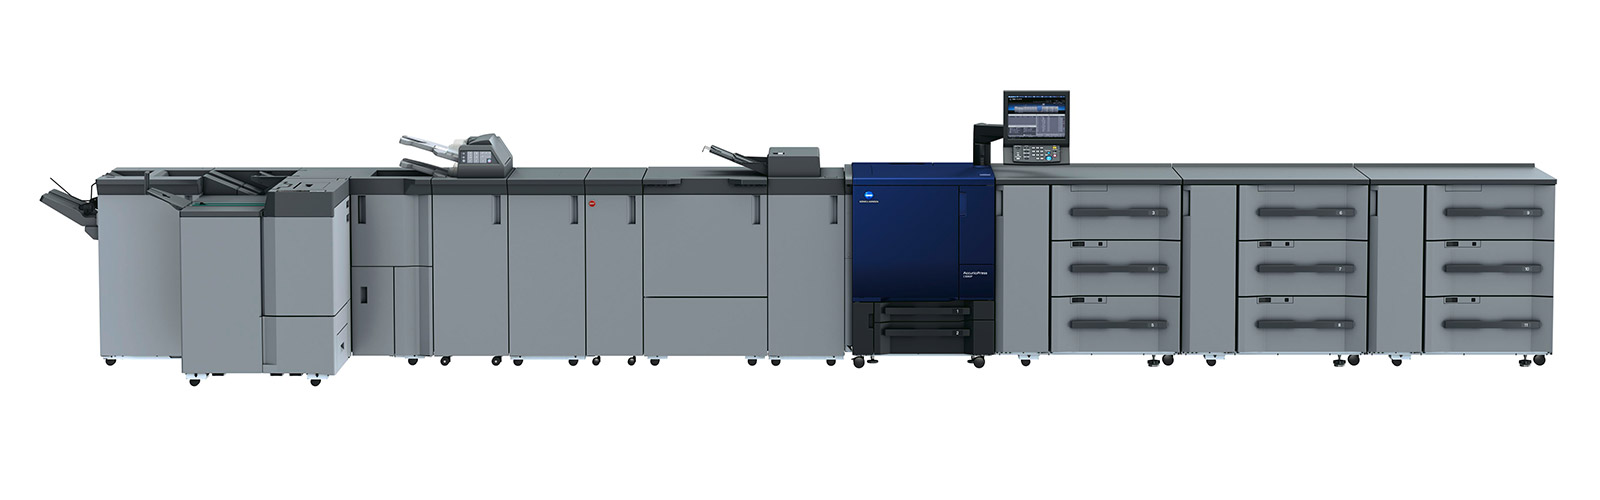 Konica Minolta AccurioPress C3080 Production Print Systems